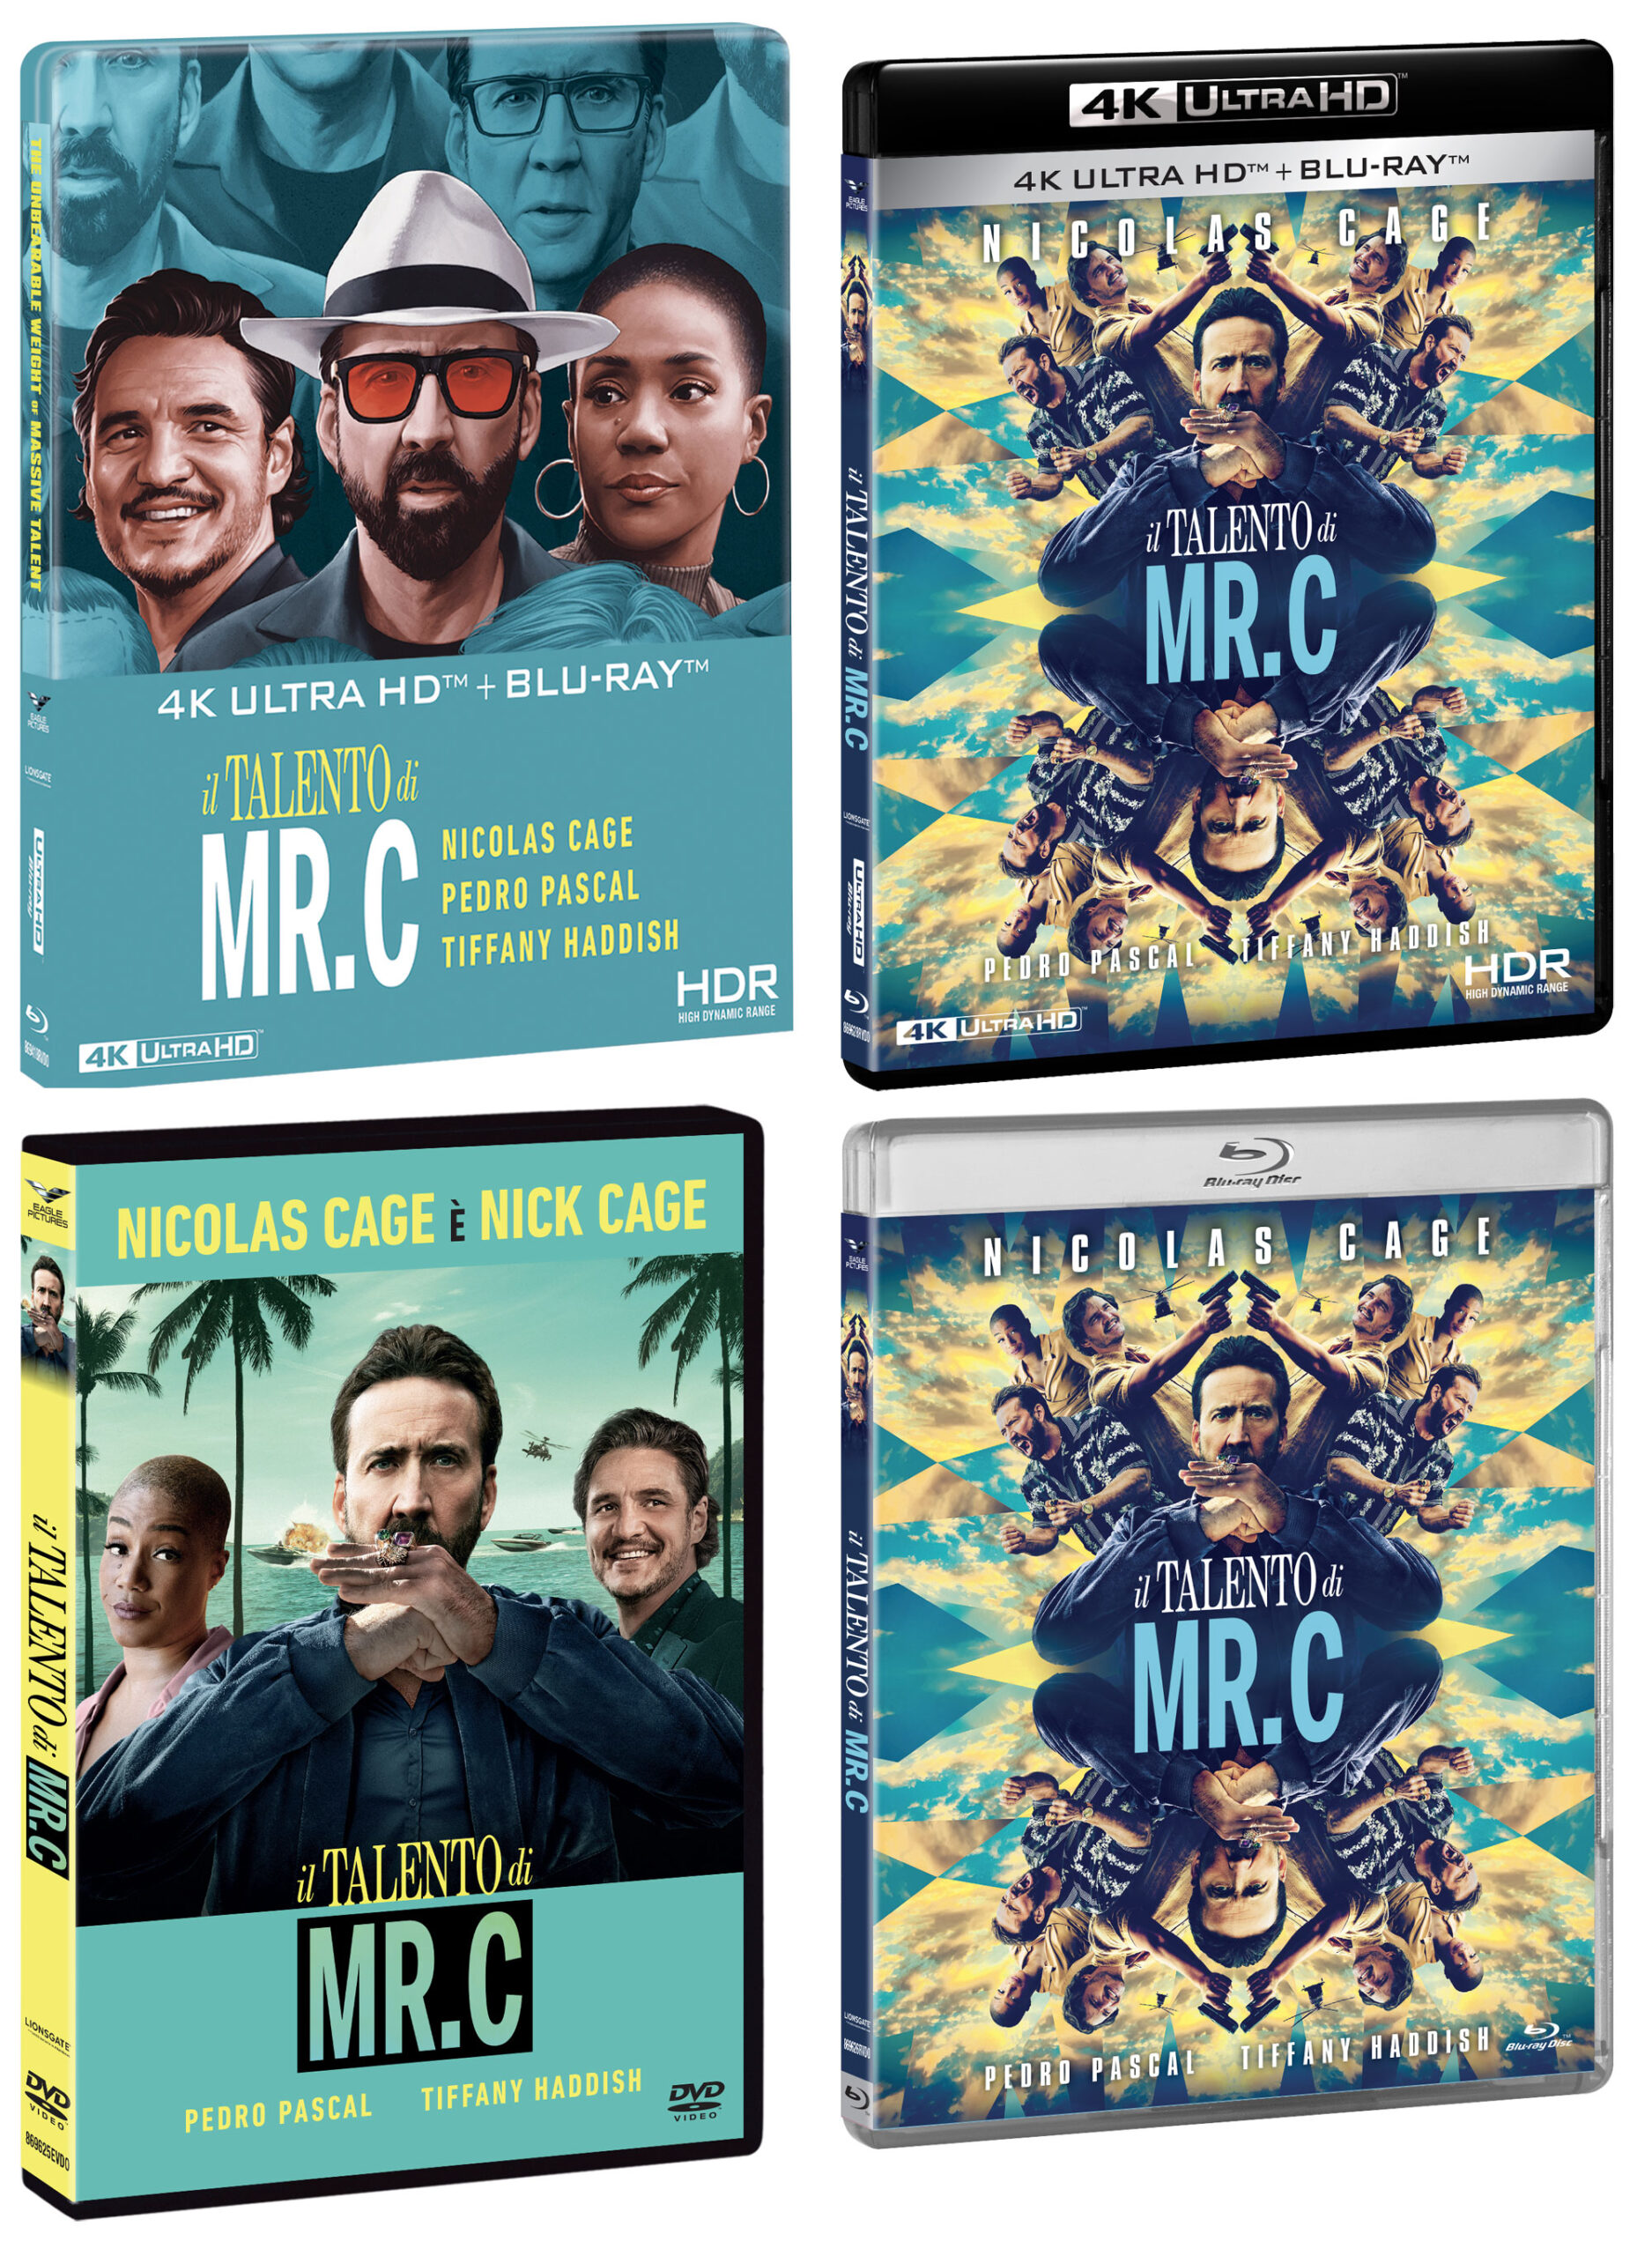 Il talento di Mr. C in DVD, Blu-ray, 4K Ultra HD e Steelbook 4K Ultra HD